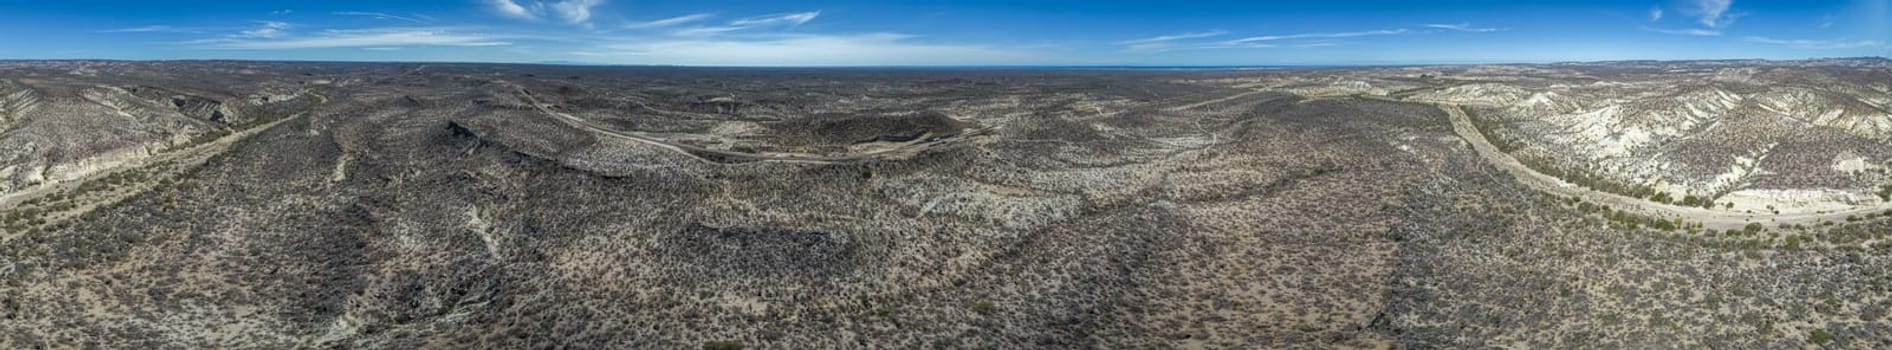 Drone Aerial view of Sierra Guadalupe Transpeninsular 1 highway in Baja California Sur, Mexico.